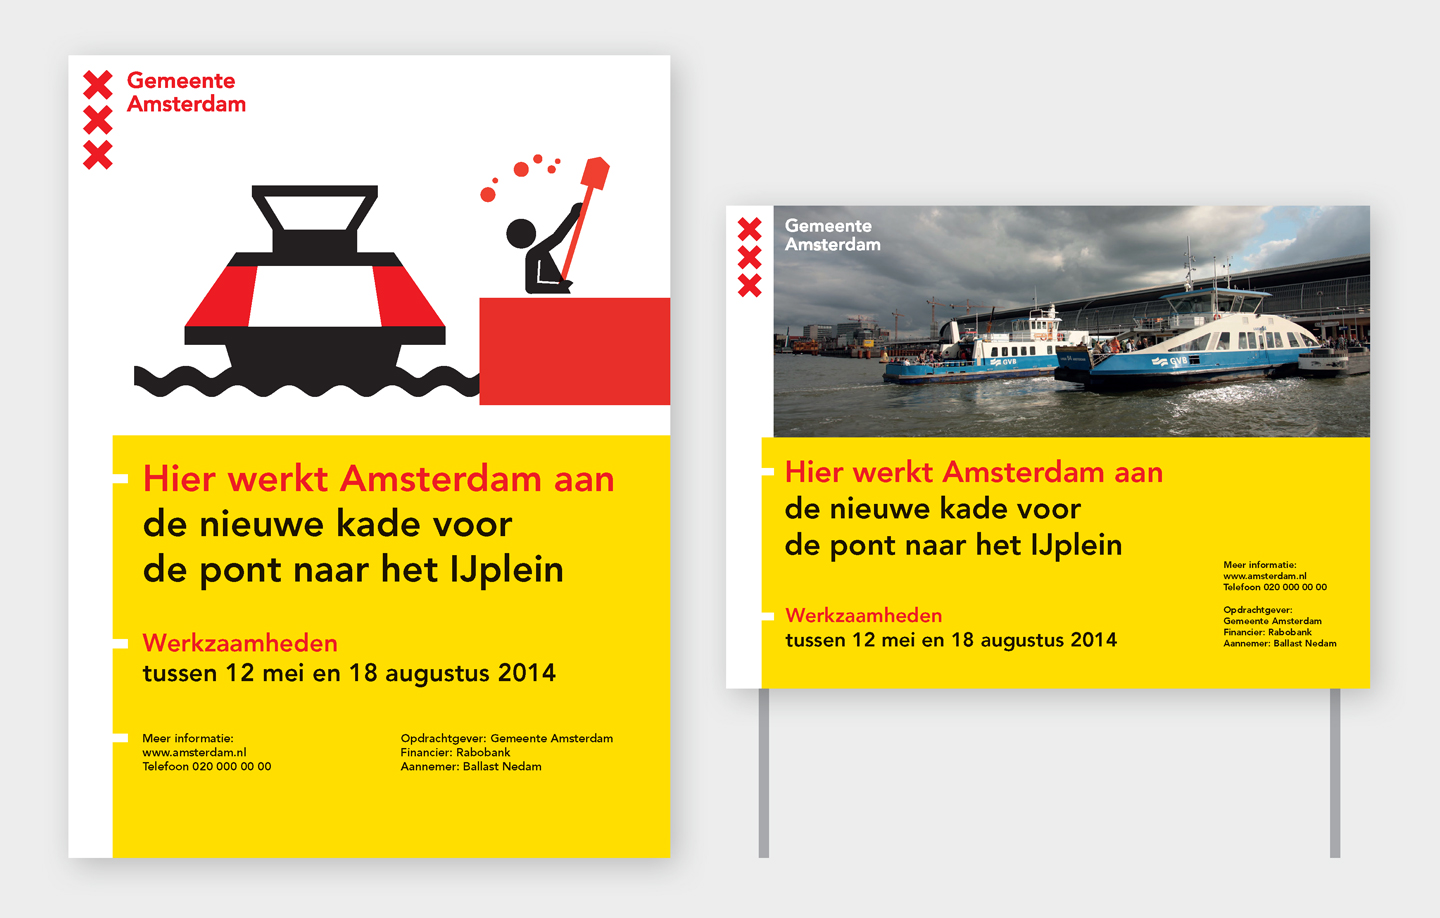 Edenspiekermann Pareert Kritiek Op Kosten Logo Amsterdam Its Not The Logo Marketingtribune Design